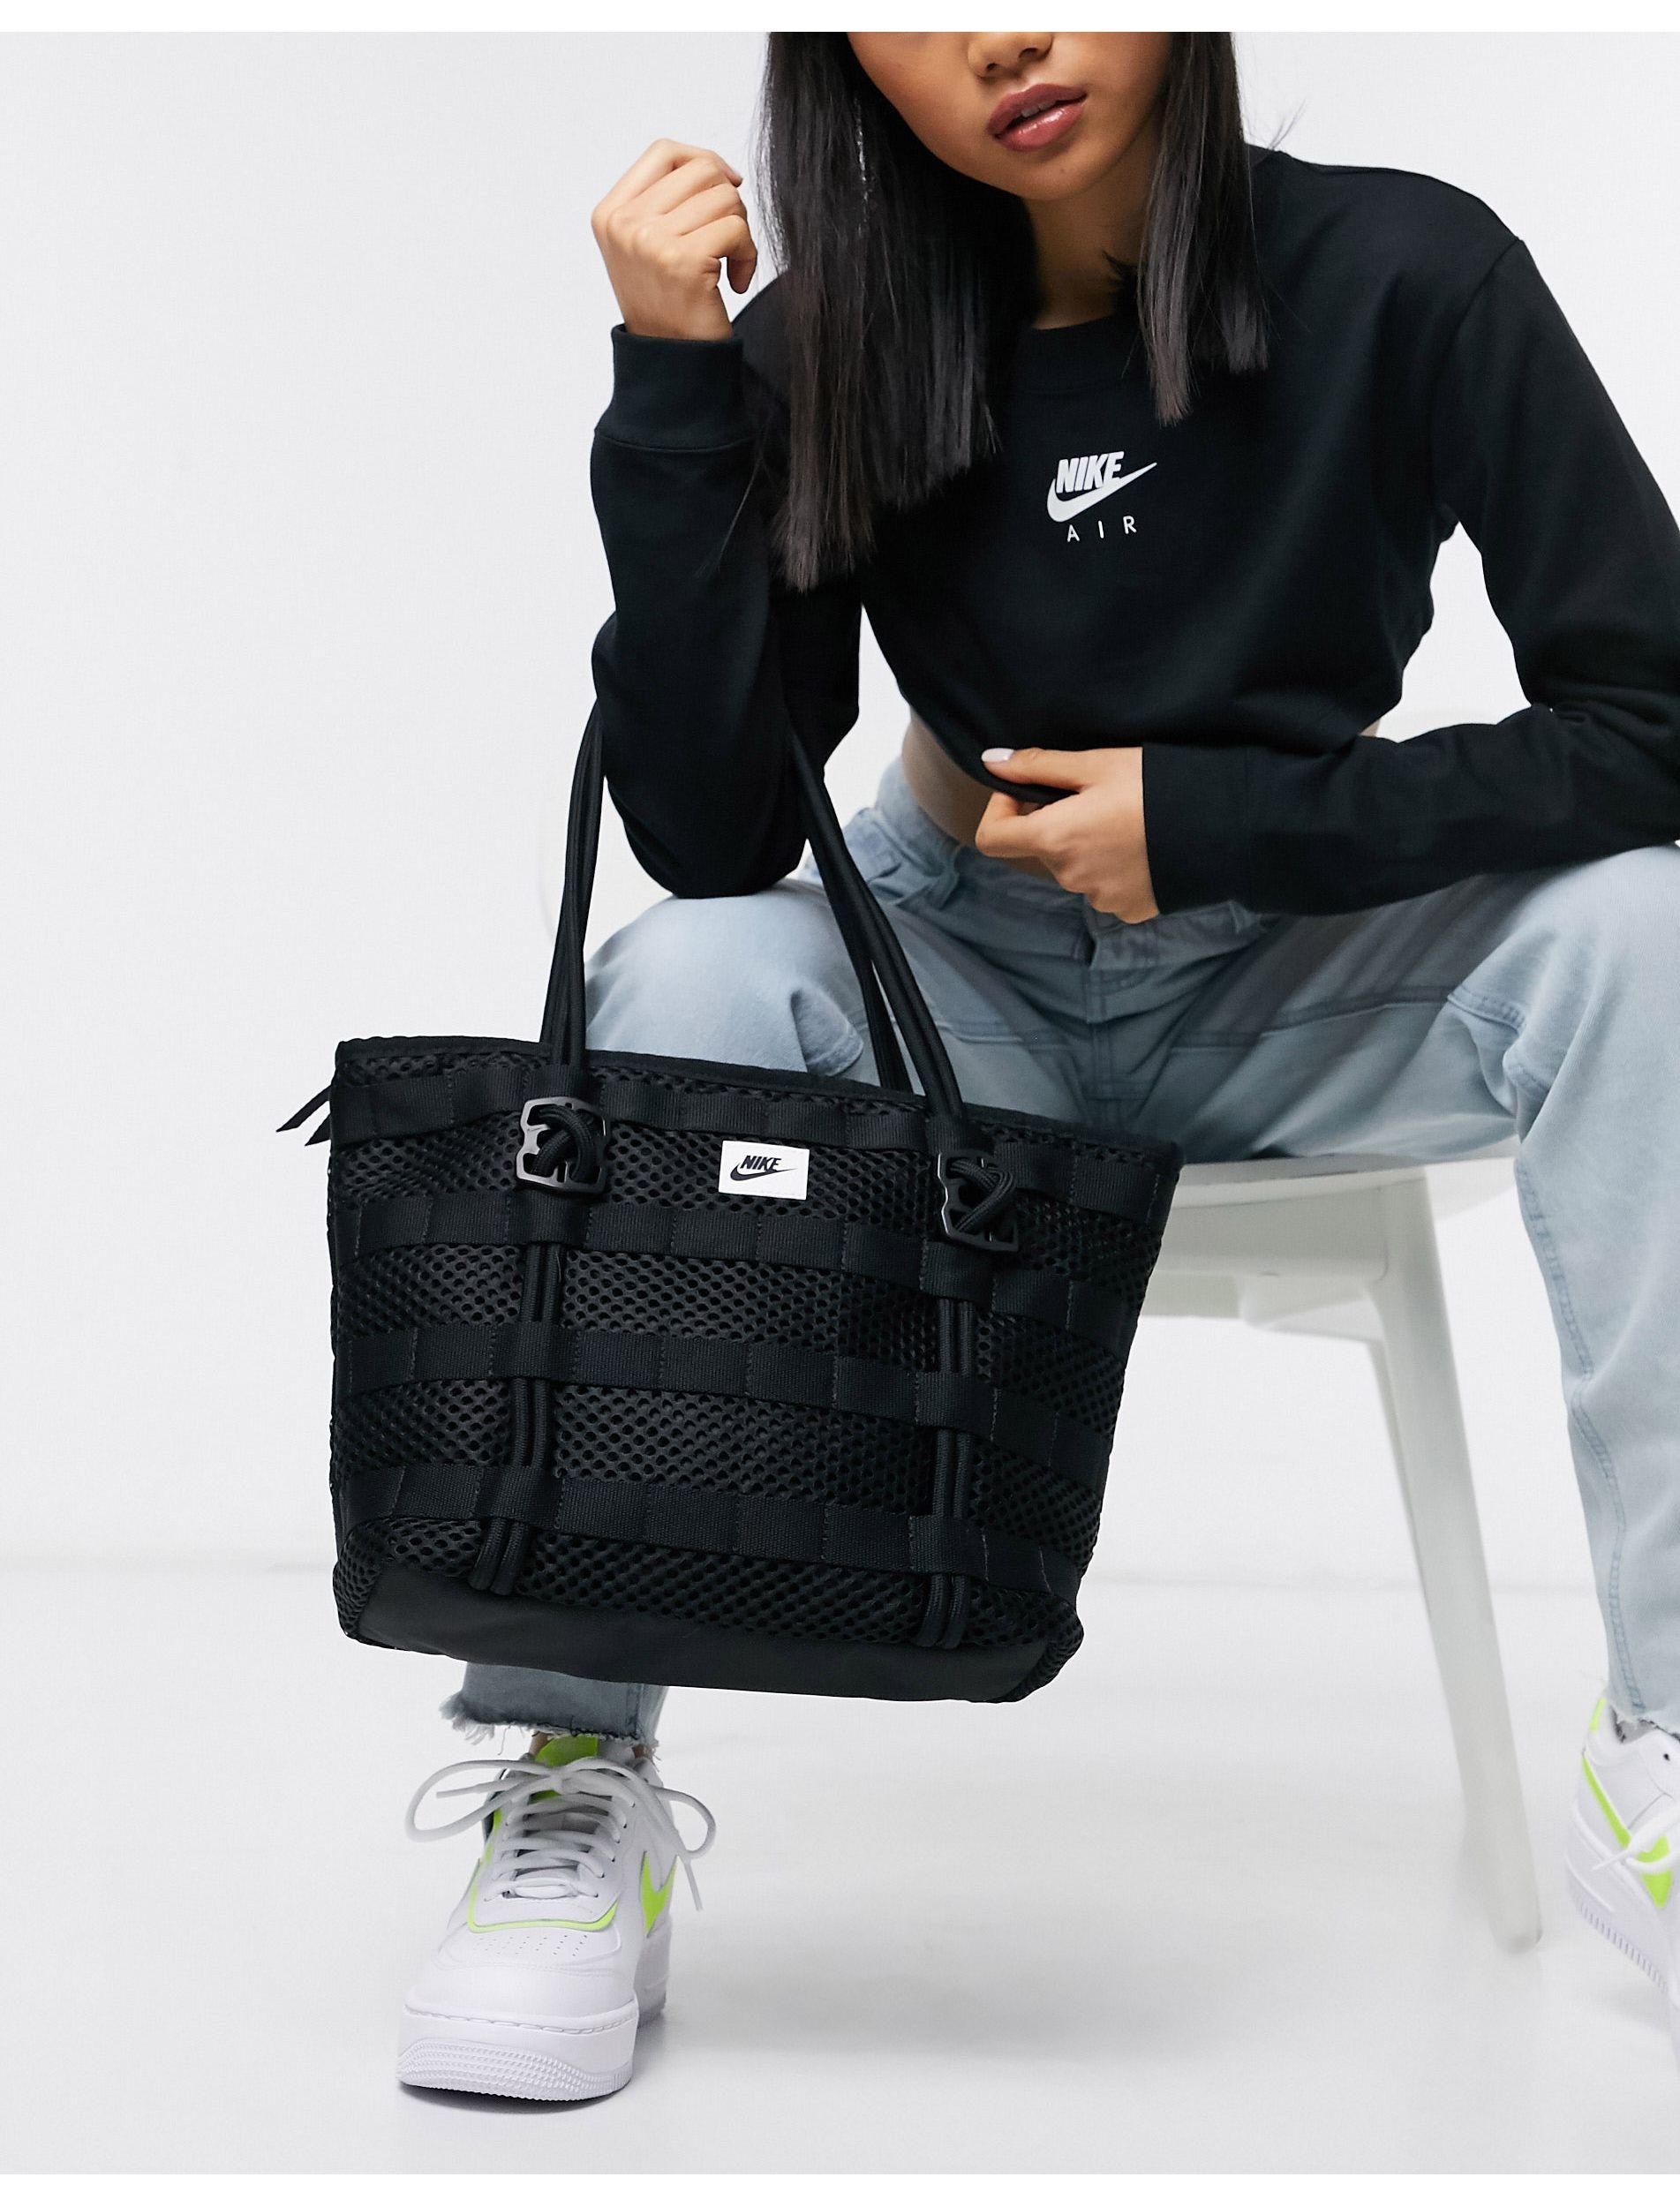 Nike Black Structured Premium Tote Bag | Lyst